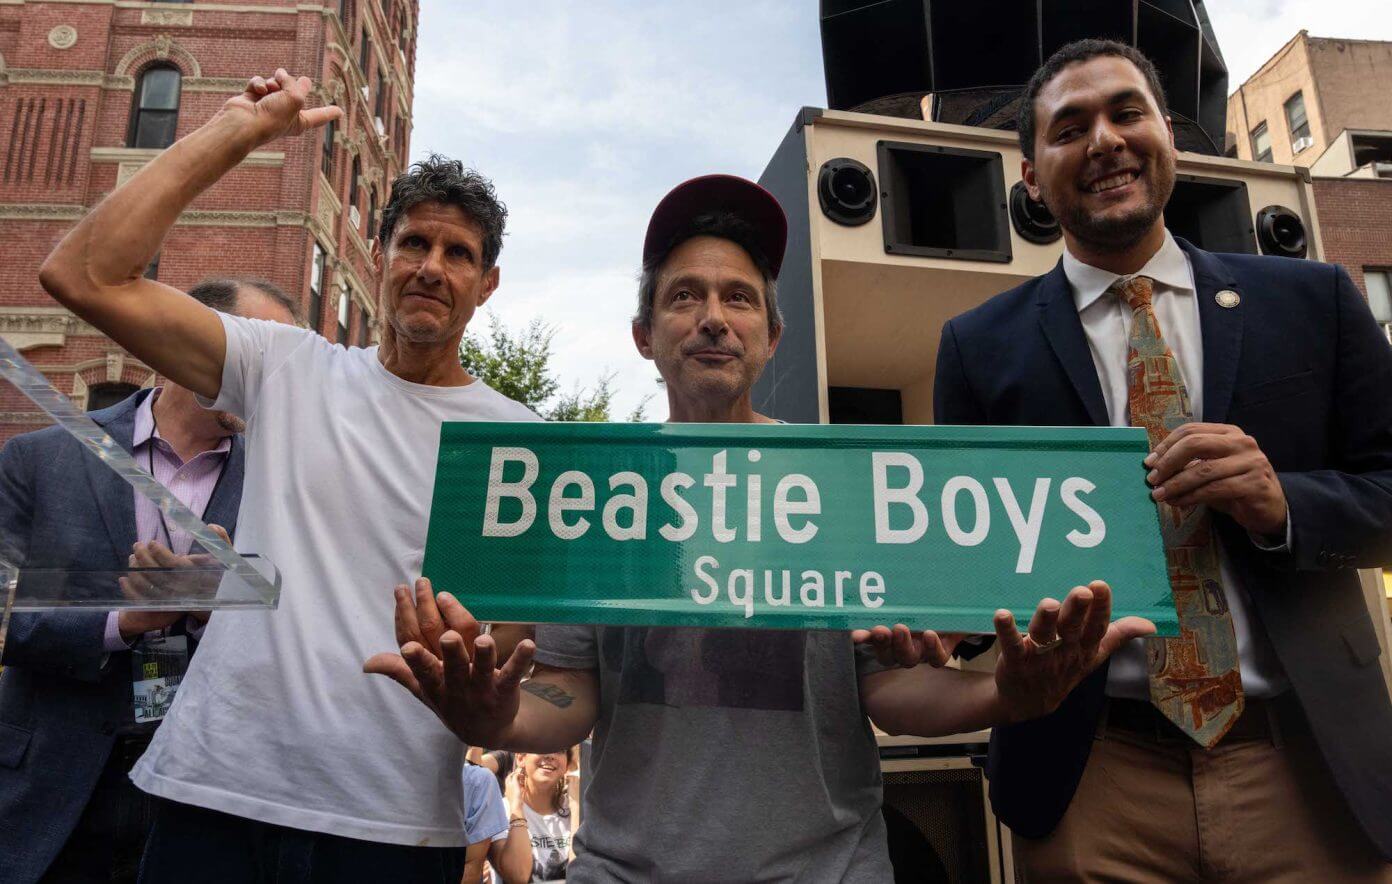 Un cruce de calles famoso en Manhattan se llama “Beastie Boys”